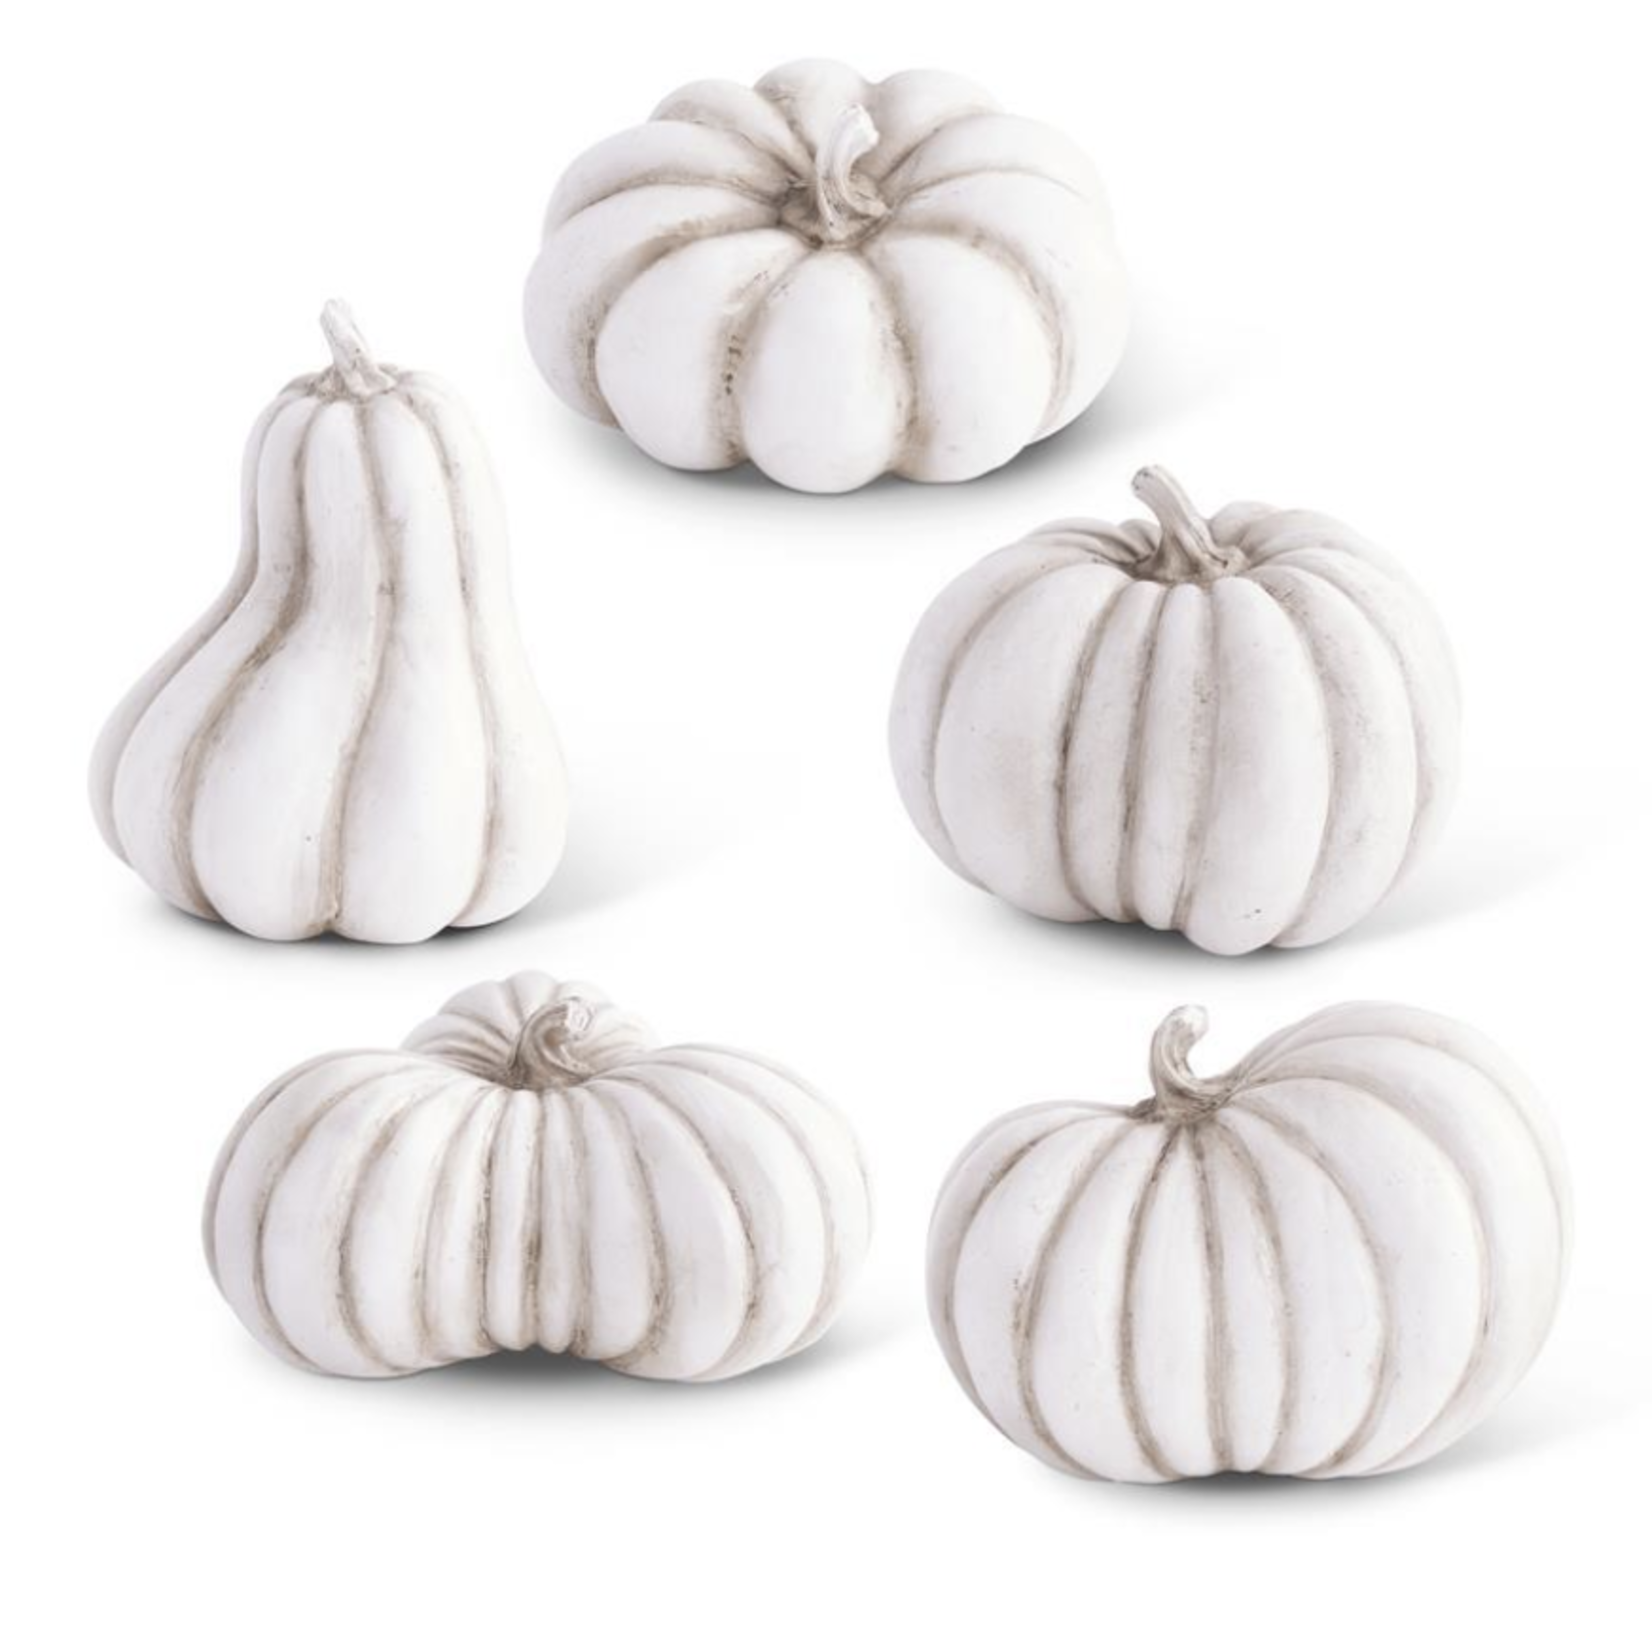 K & K Interiors Assorted White Resin Pumpkins